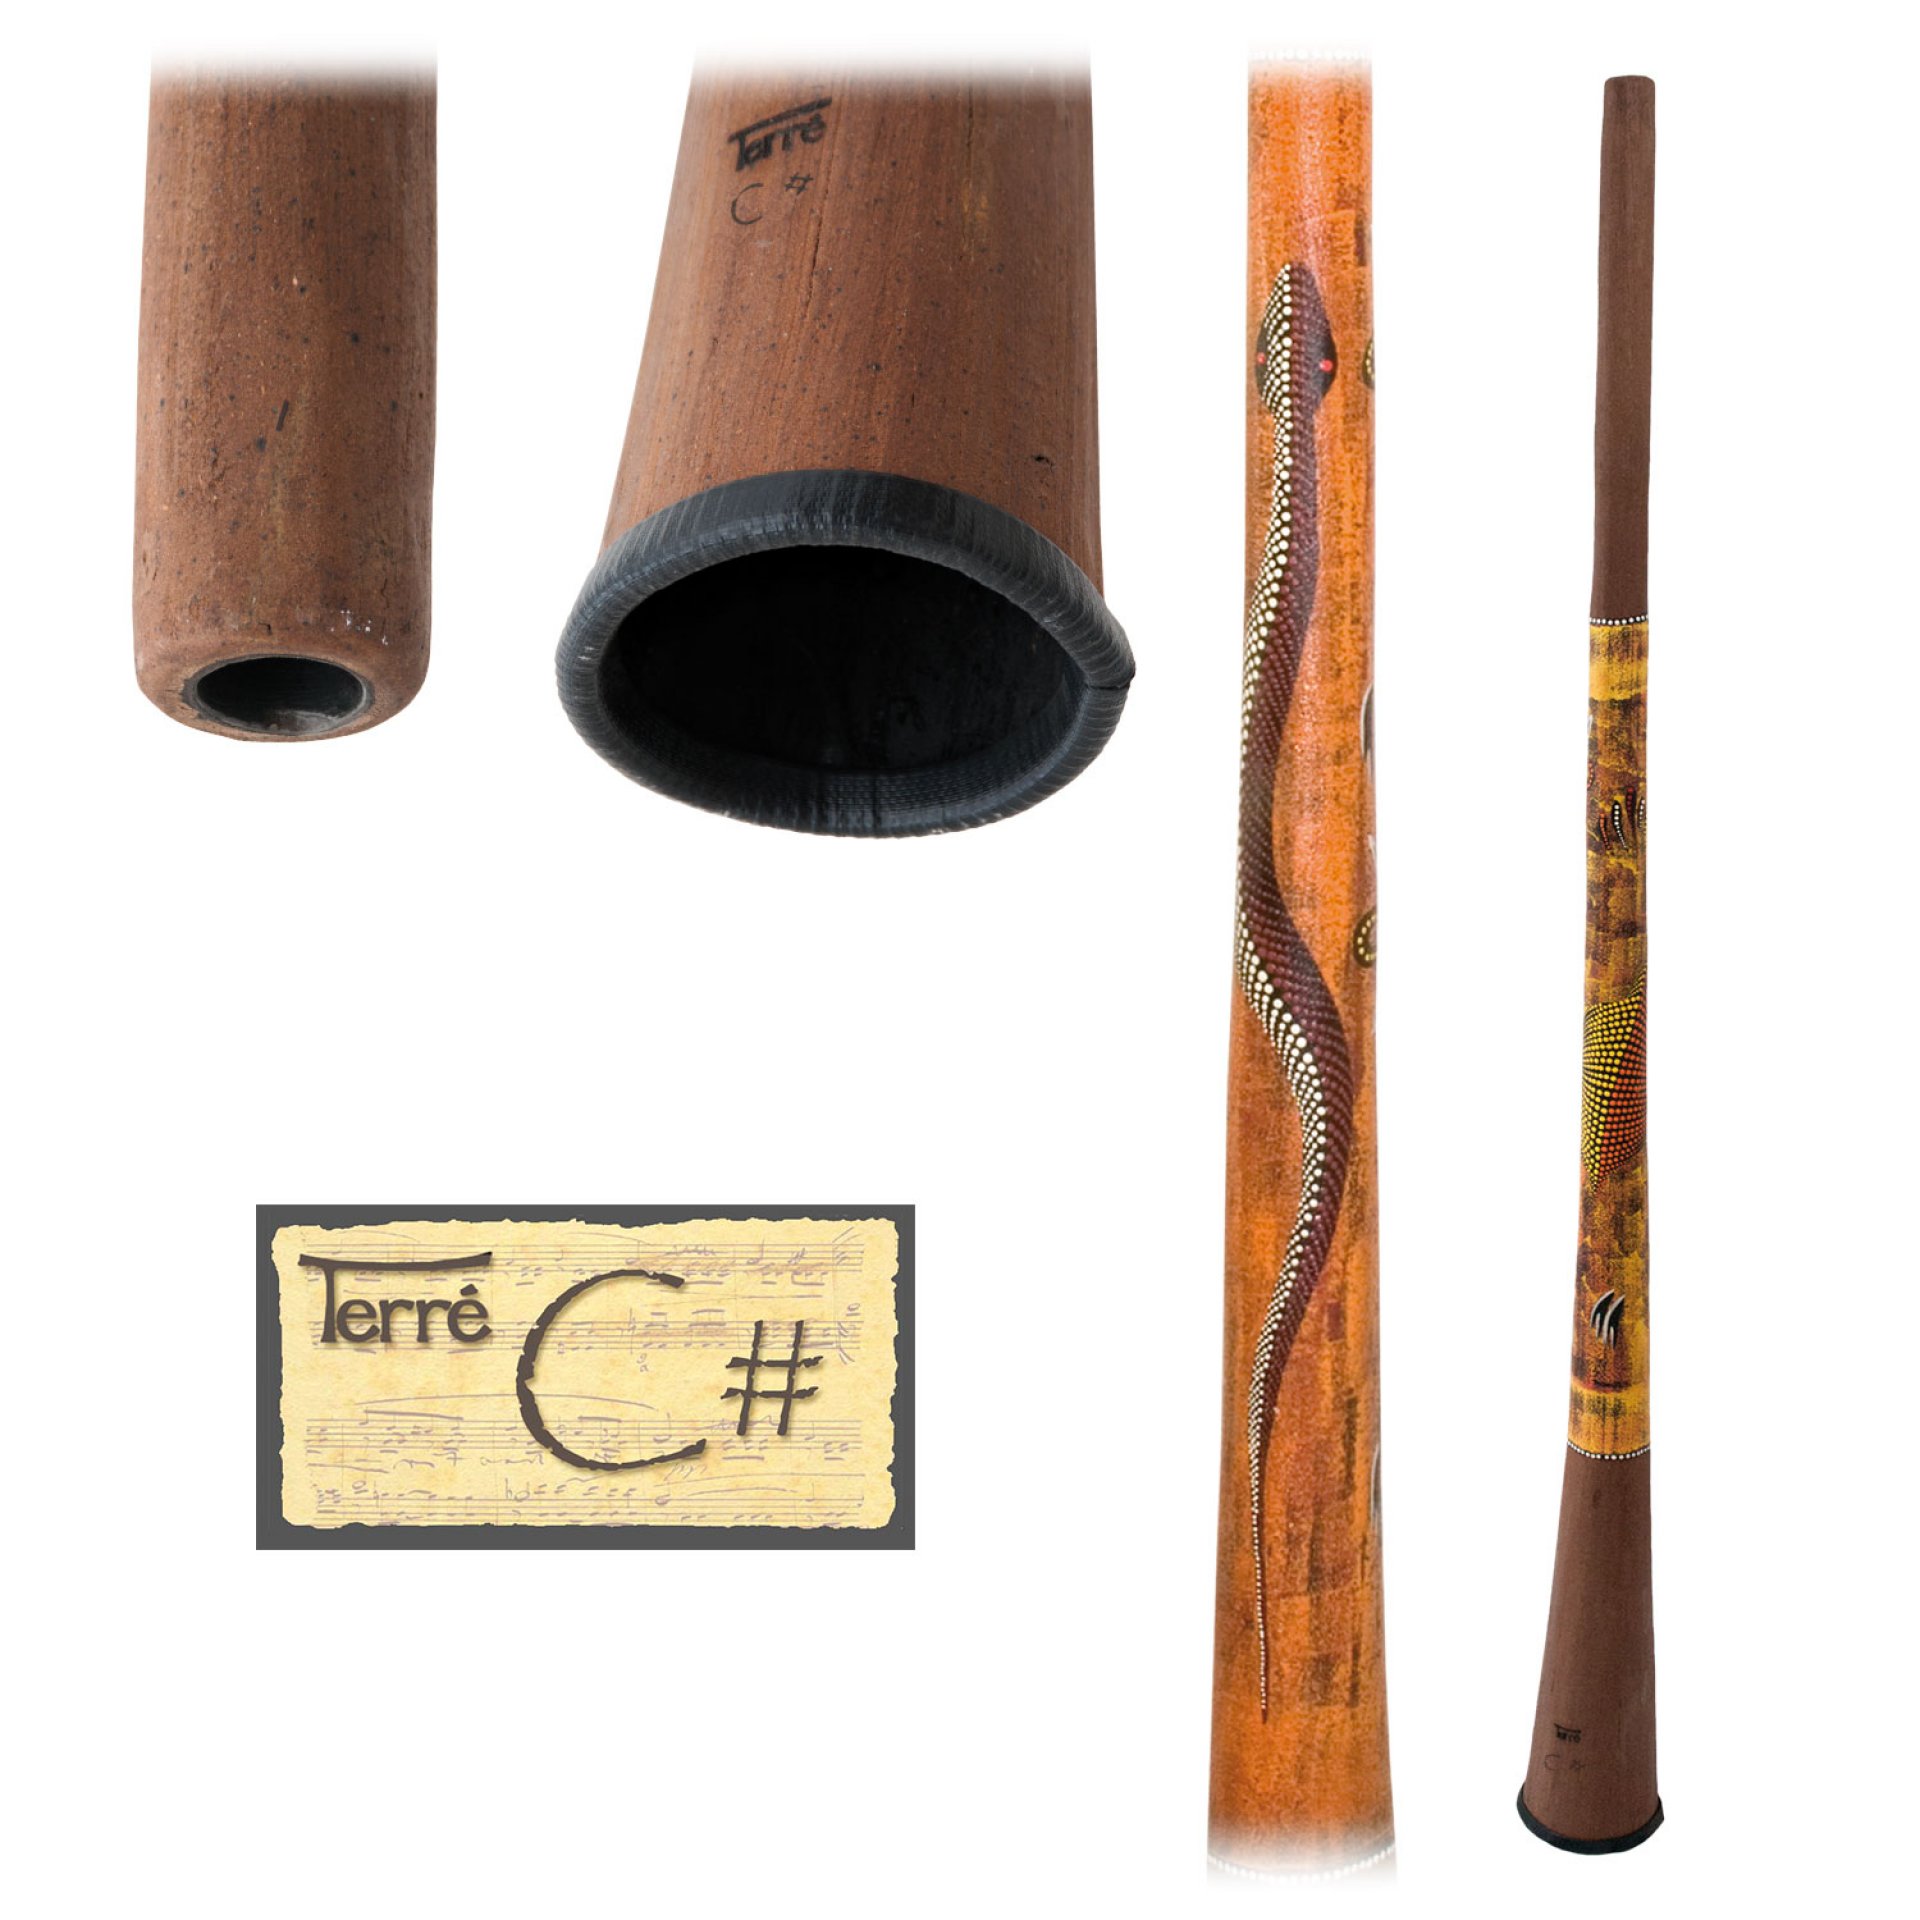 Baked wood Didgeridoo Cis